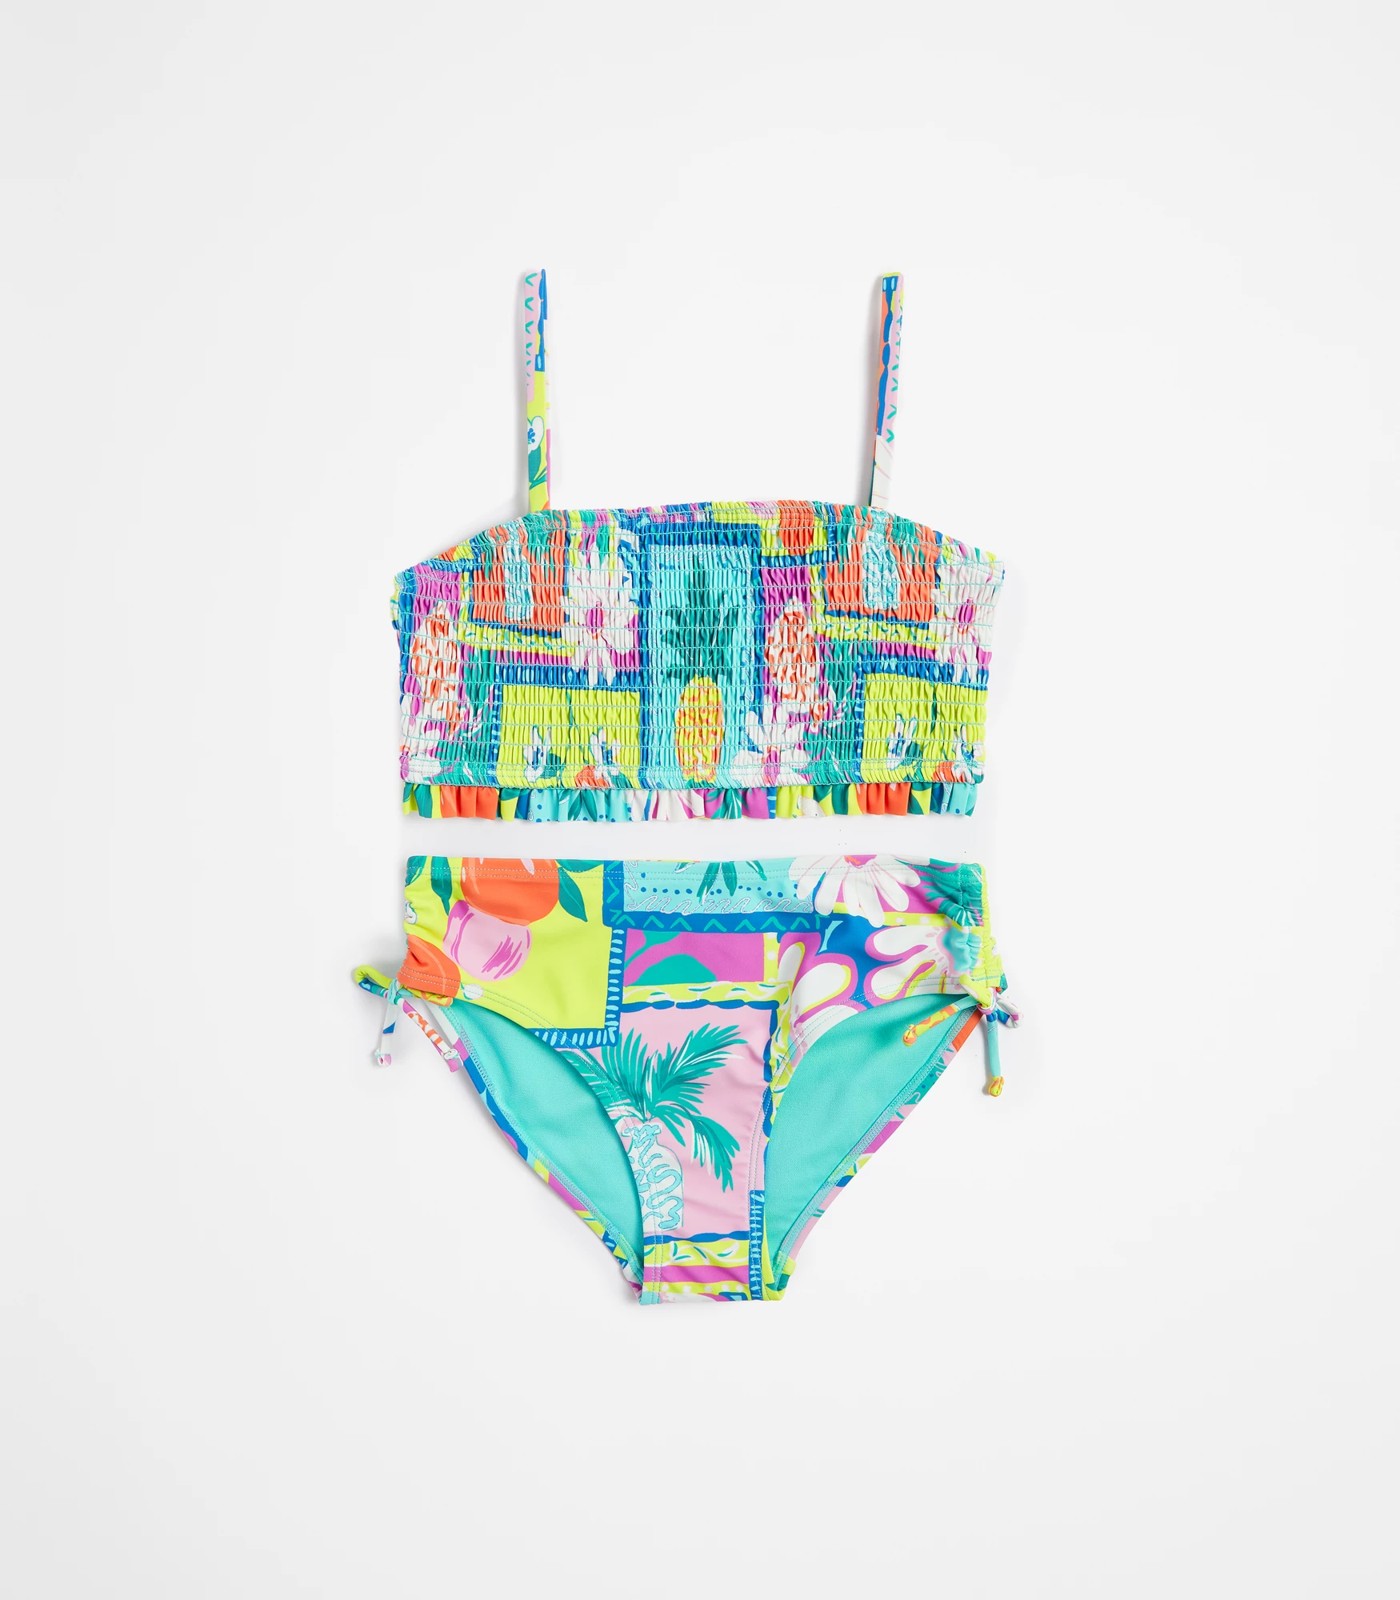  Girls 2-Piece Swimsuit Tropical Swimwear Set for